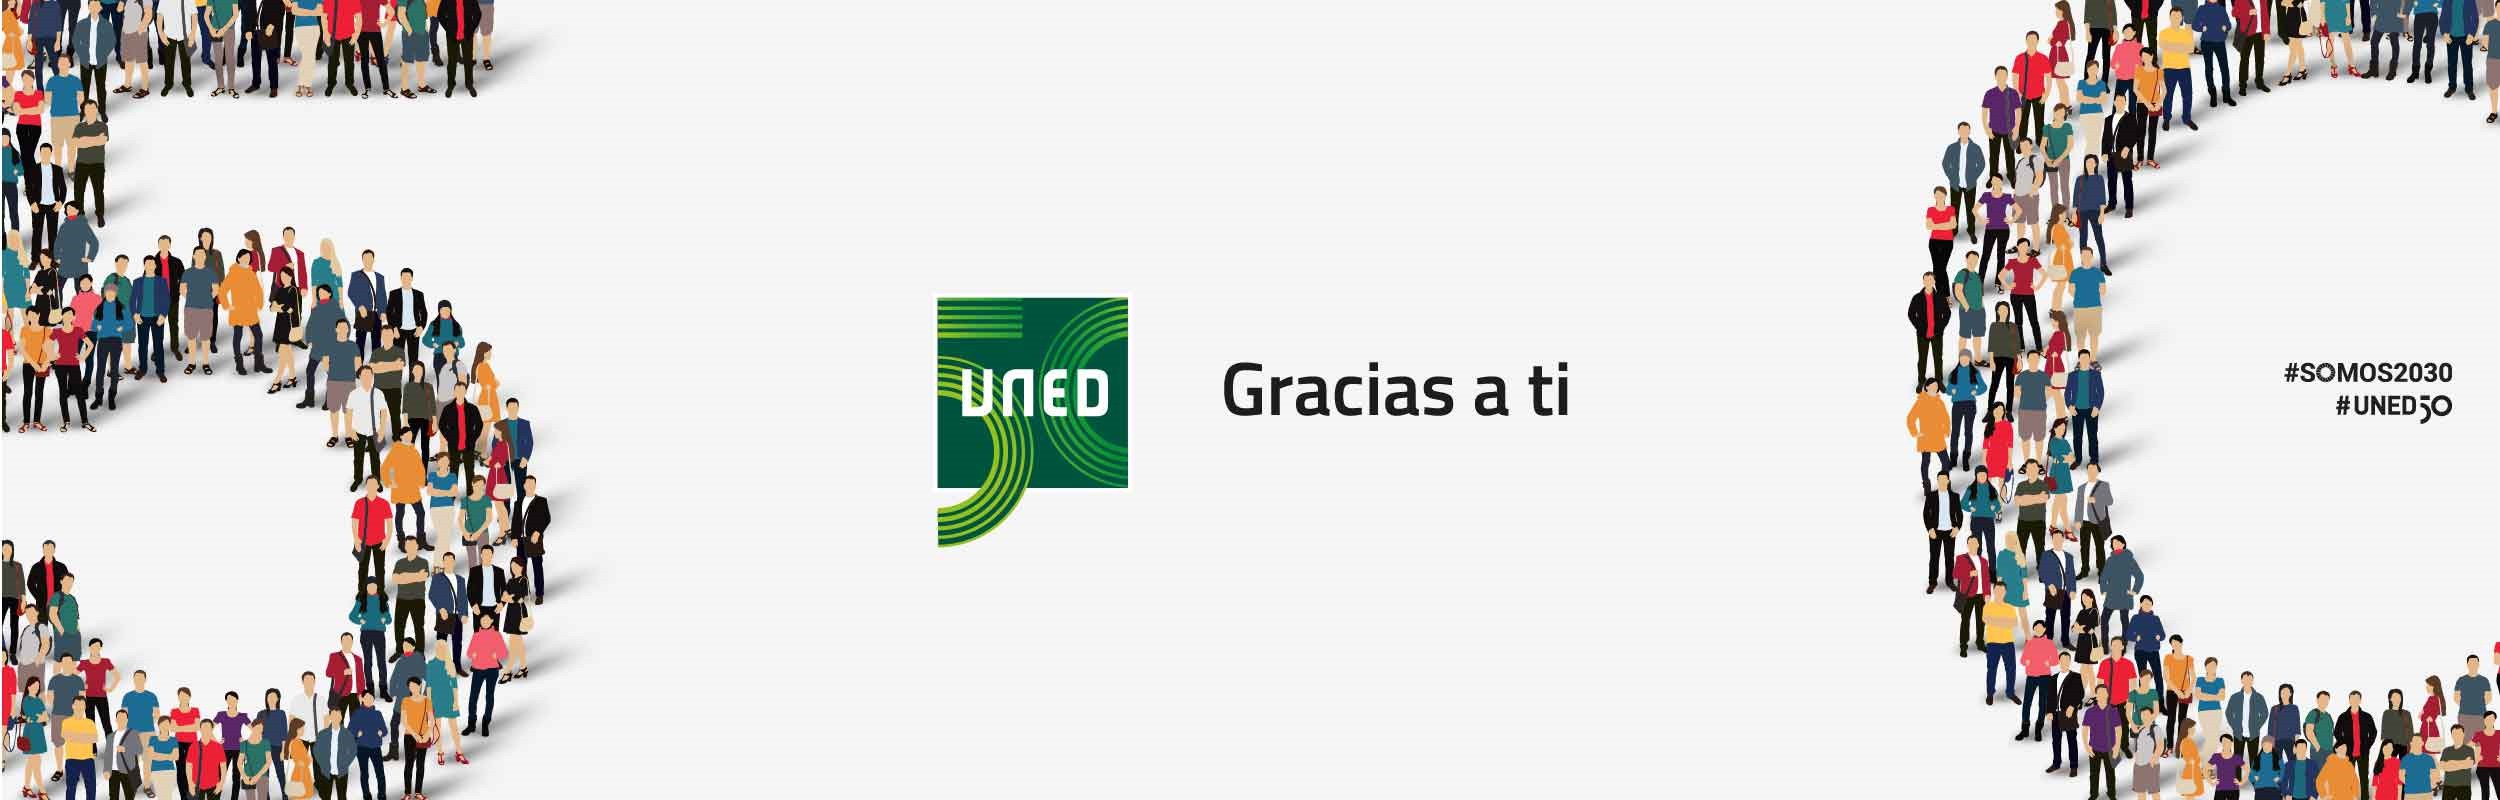 Banner-UNED50-Gracias-a-ti-low